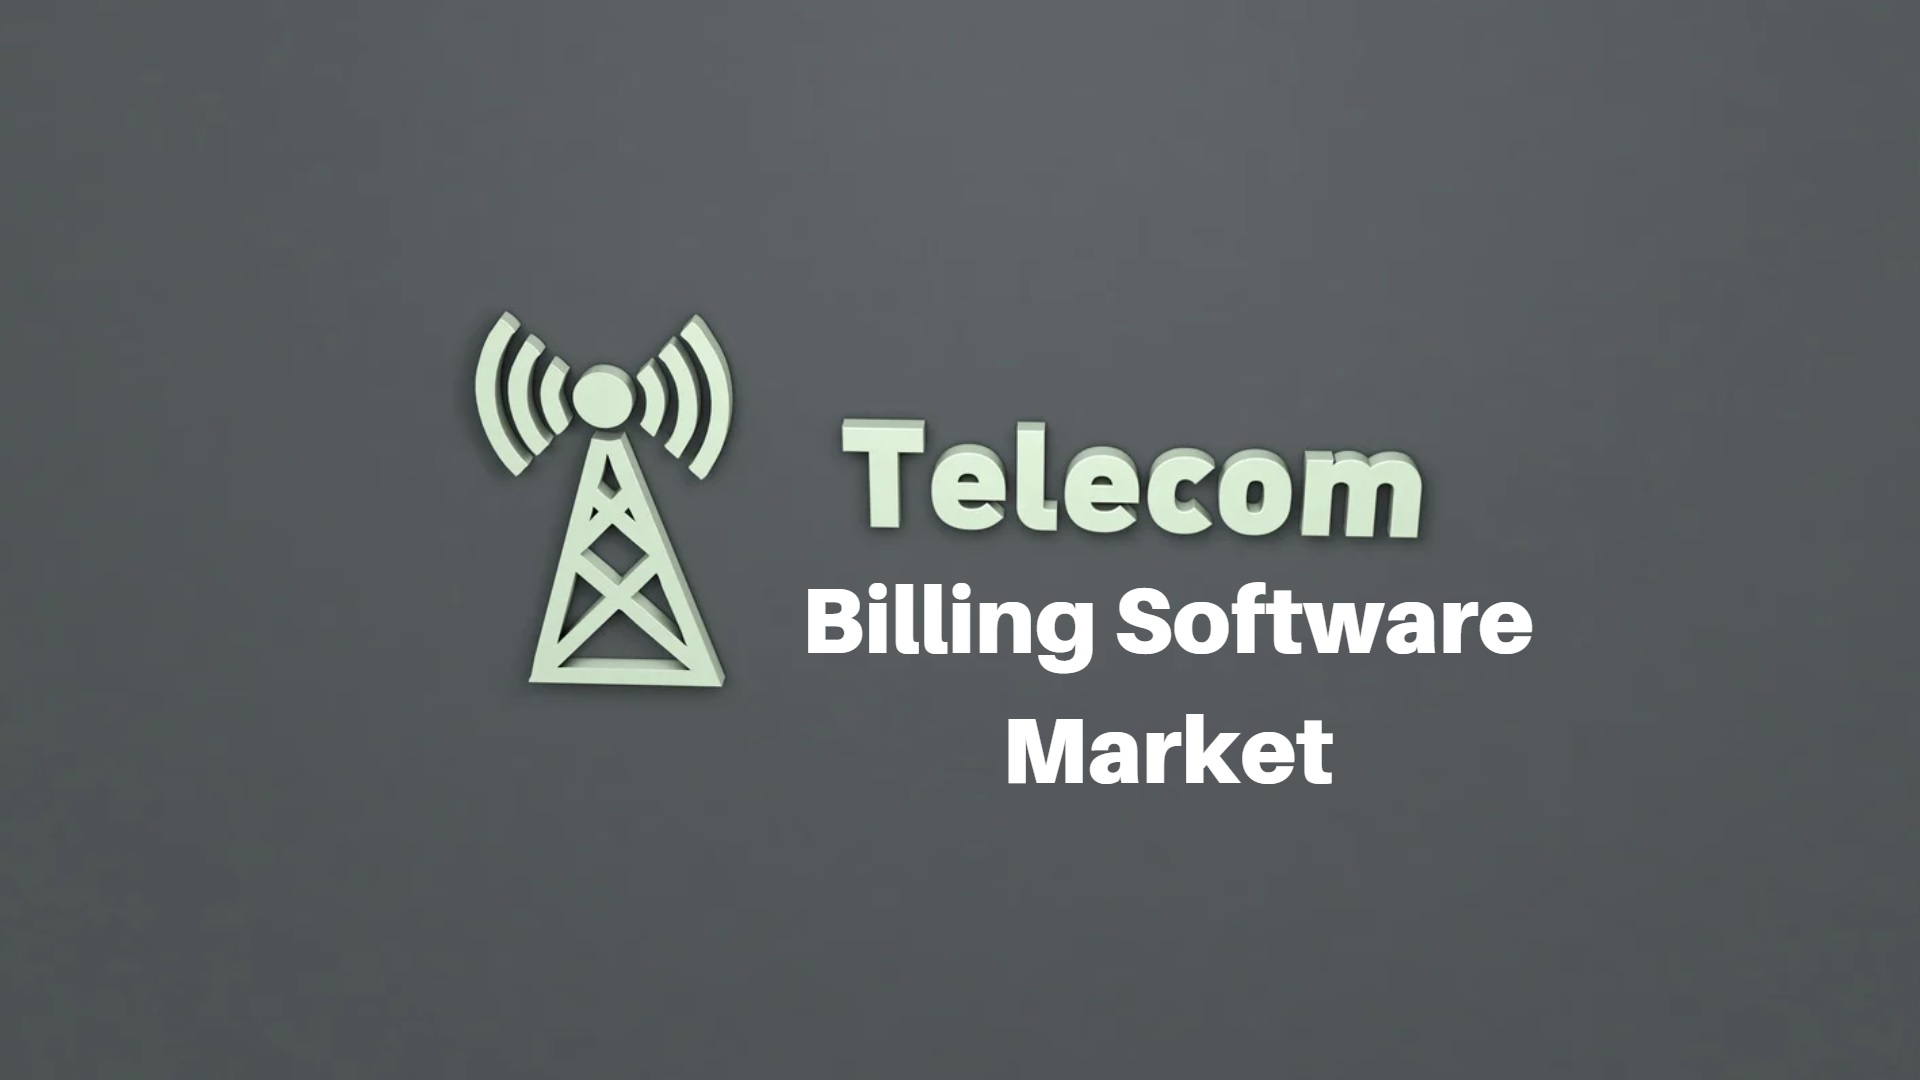 Telecom Billing Software Market Will Hit USD 46.58 Bn by 2033